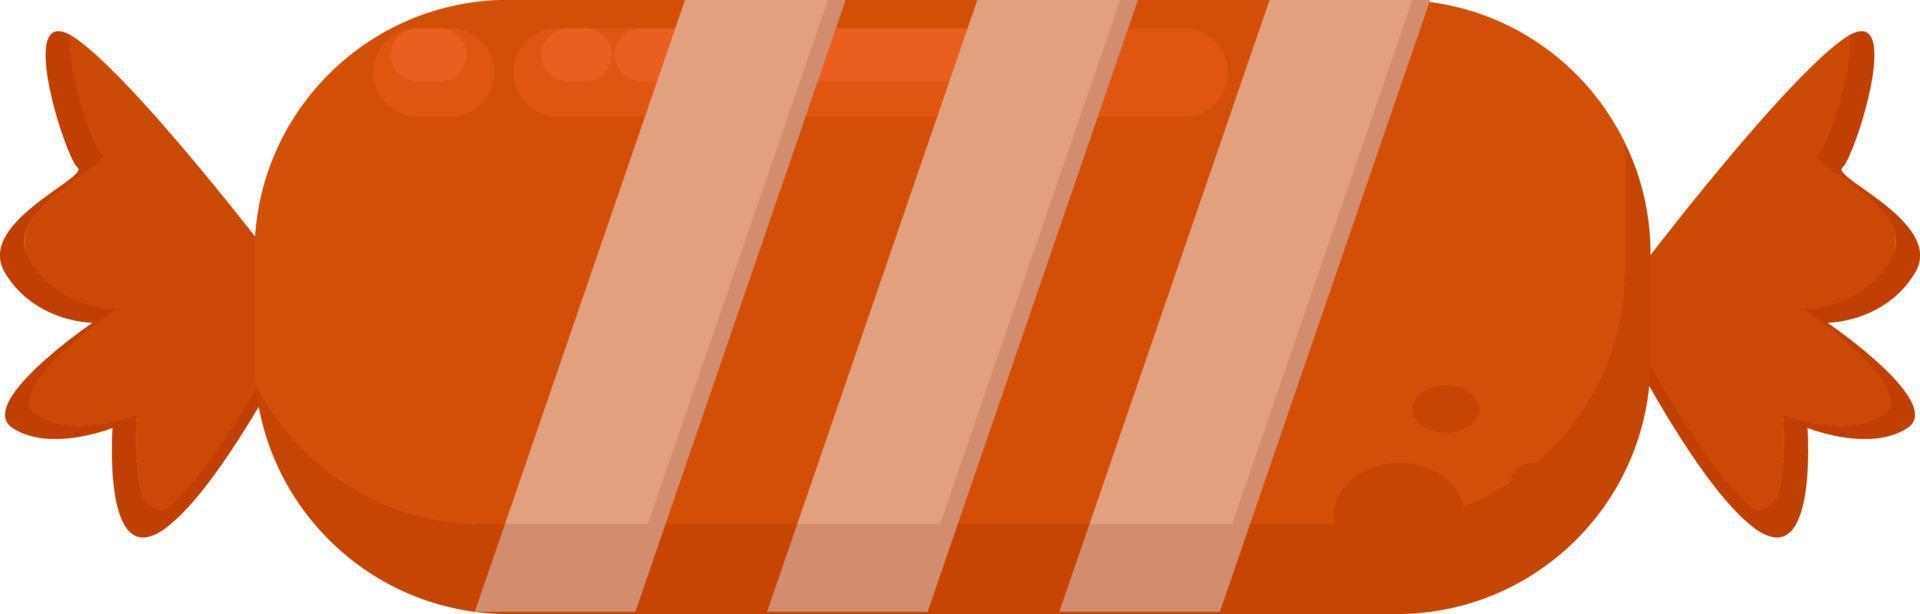 orange godis, illustration, vektor på vit bakgrund.